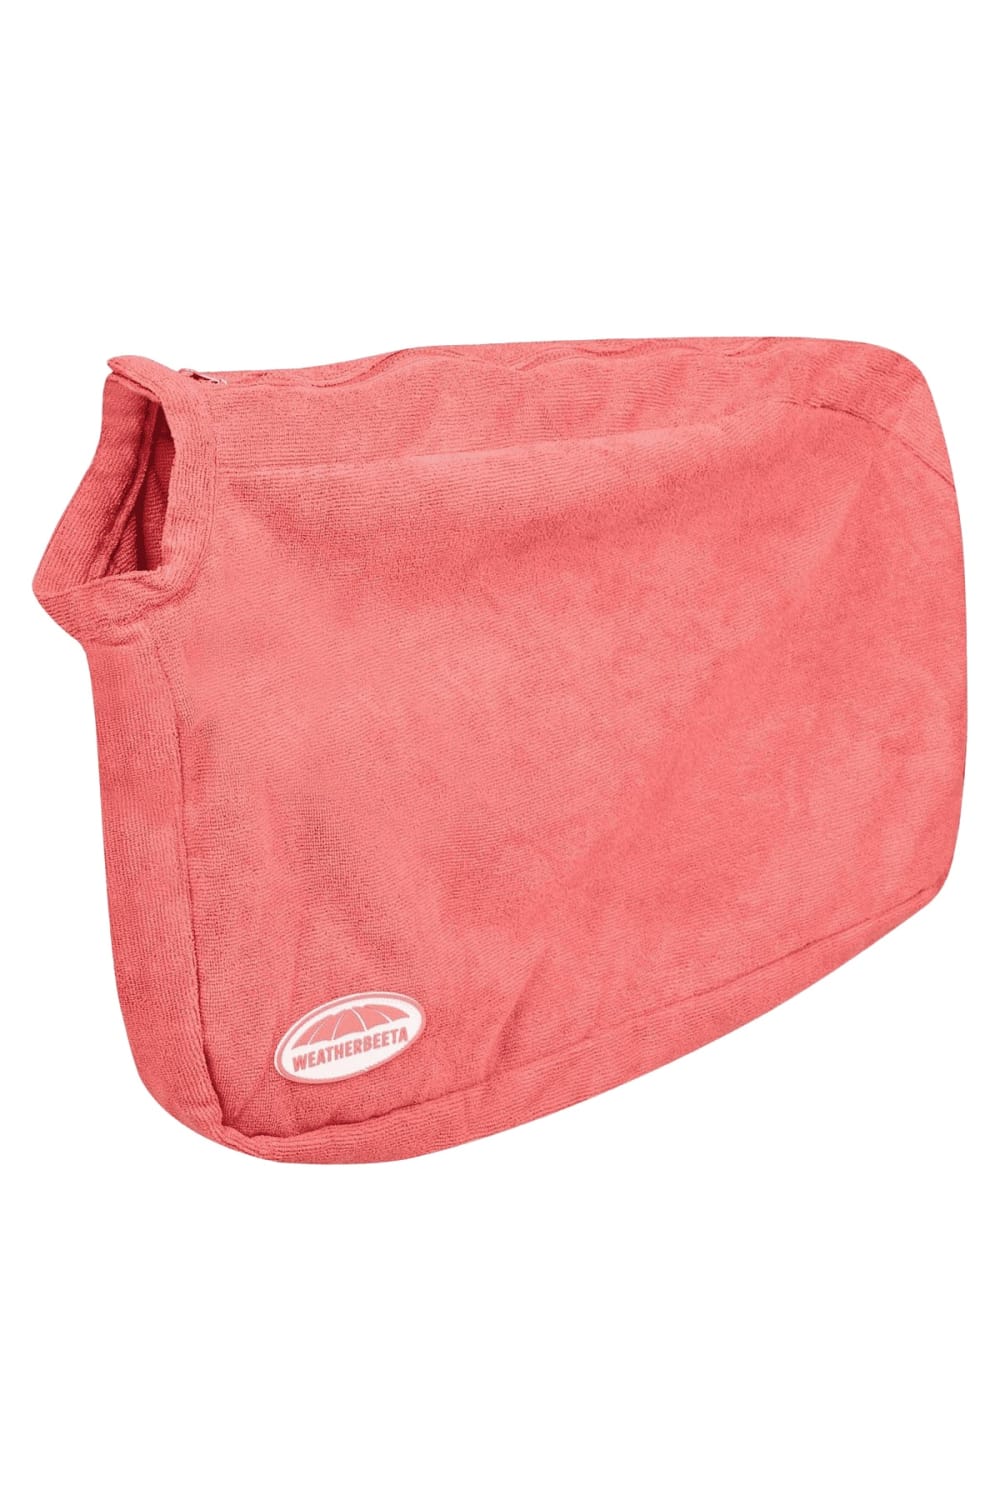 Weatherbeeta Dry-dog Bag (Red) (XS)